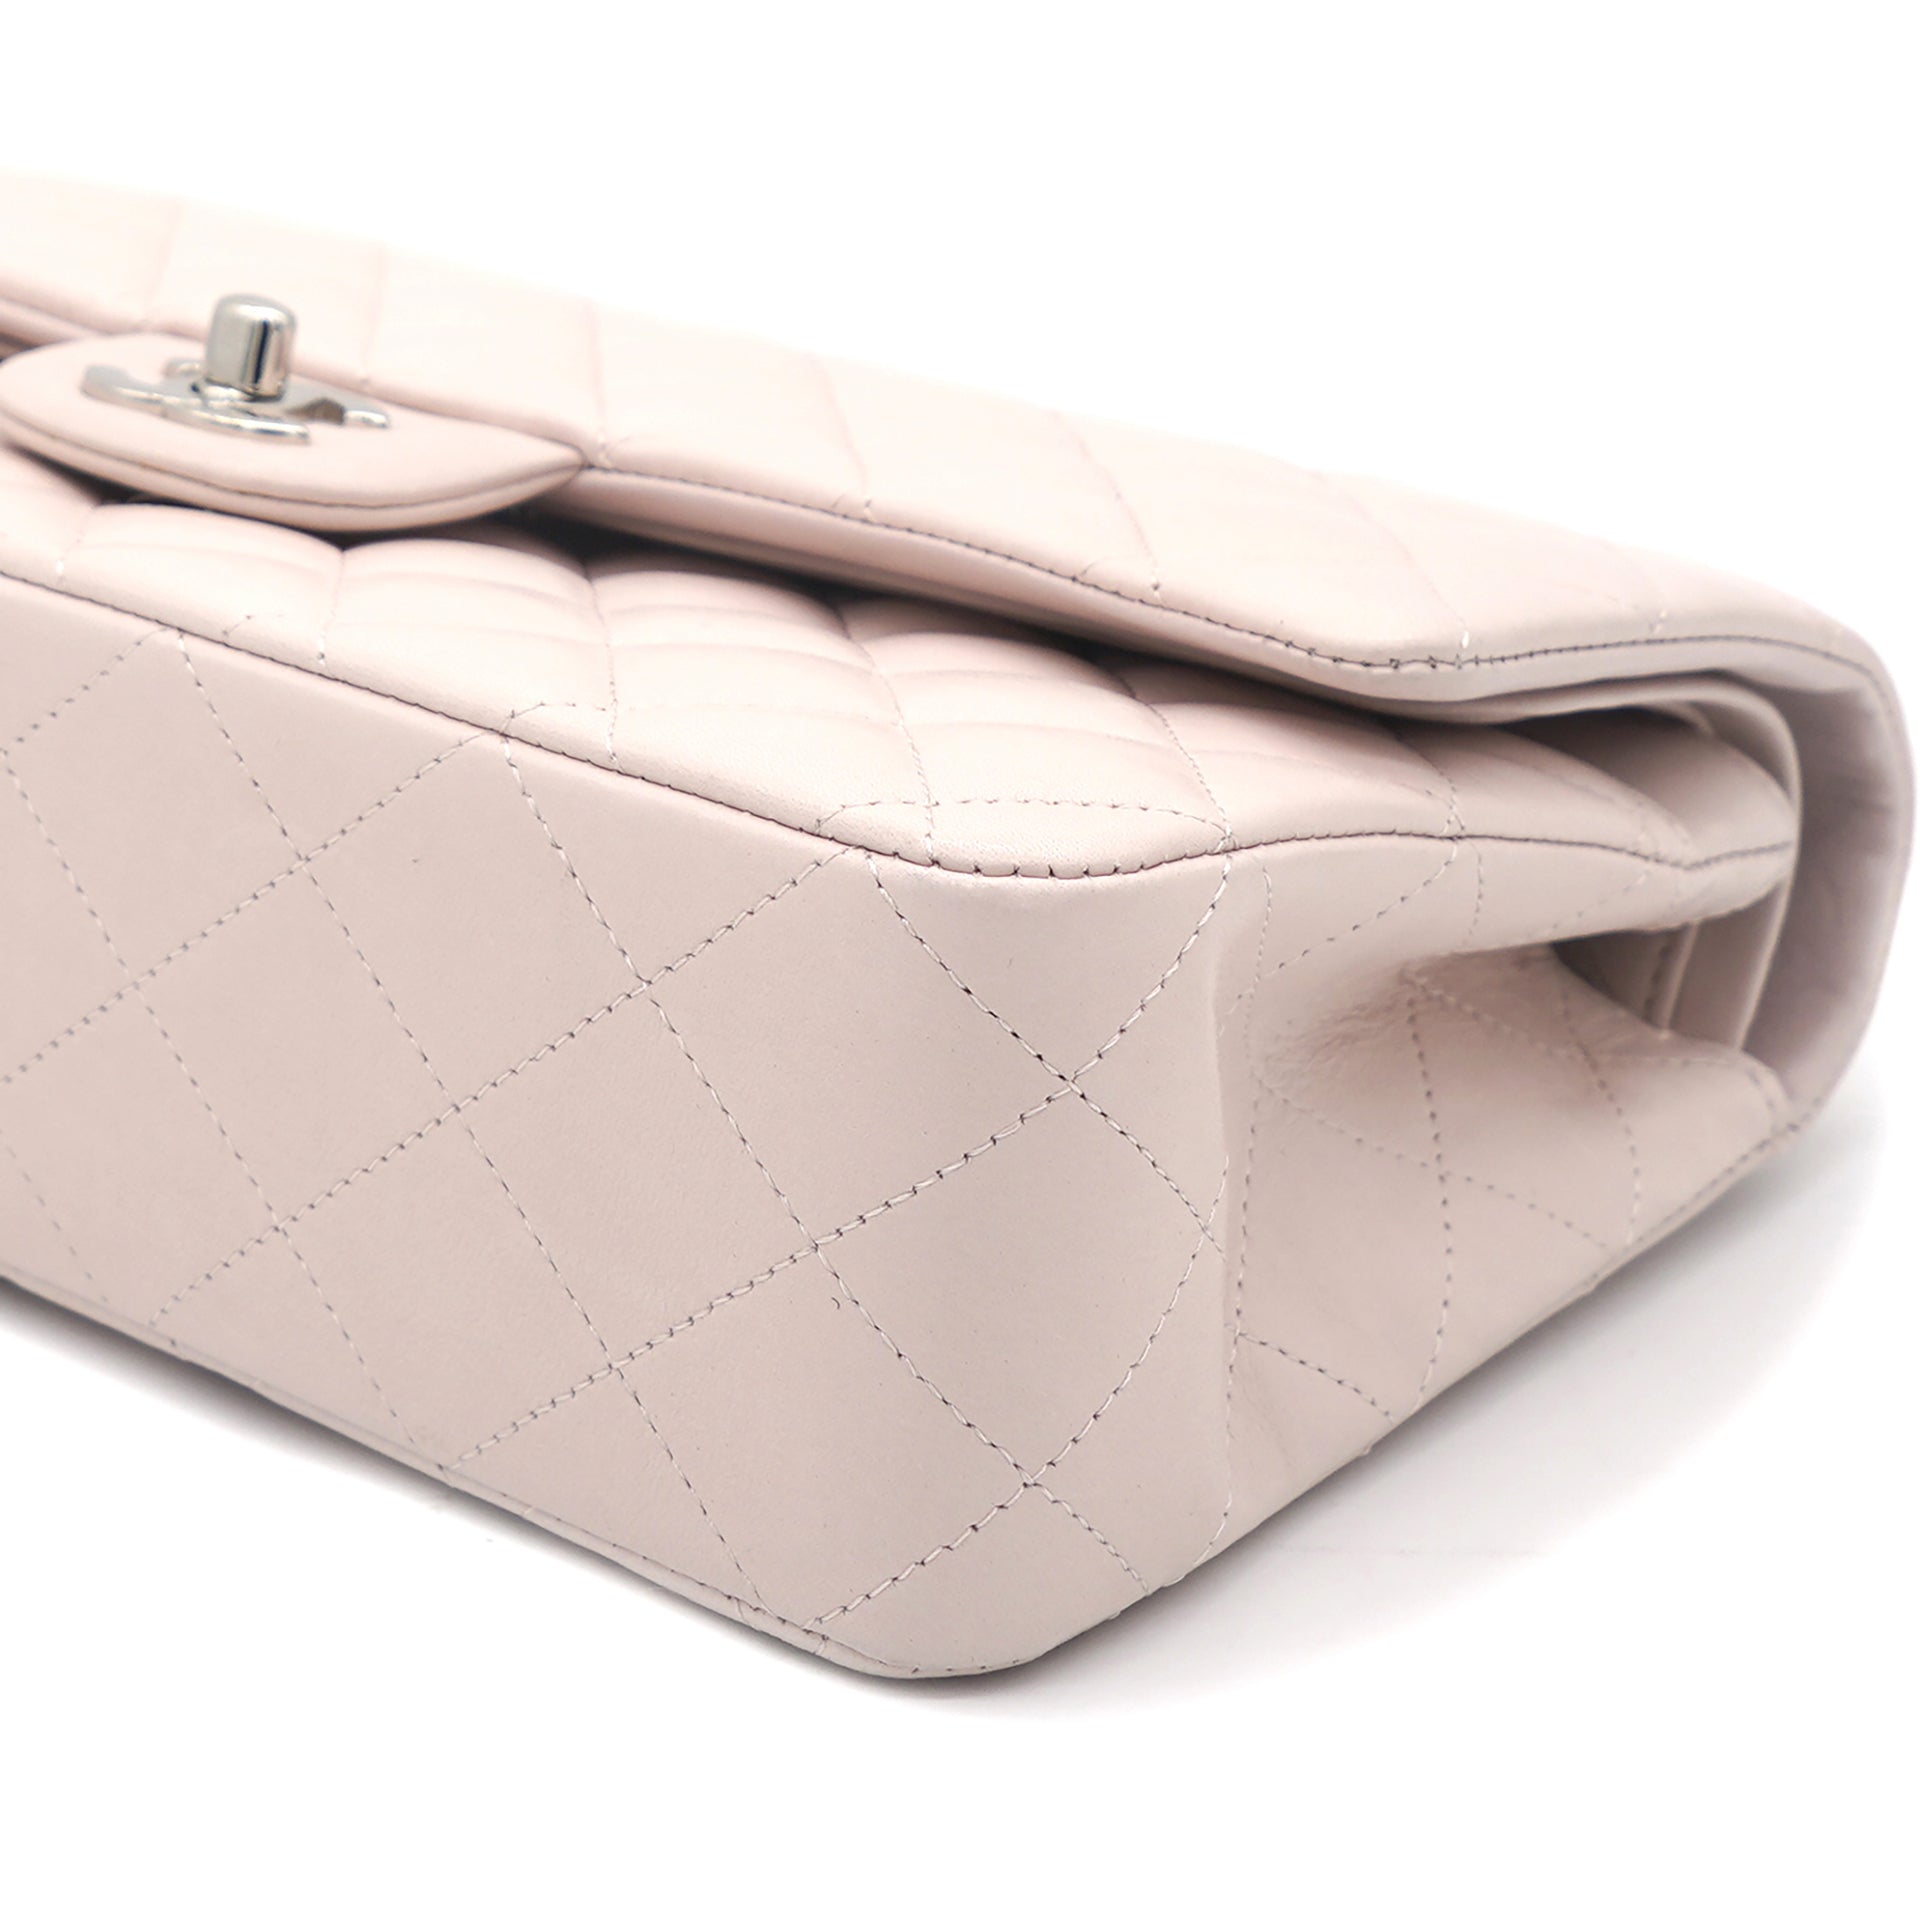 Chanel Pink Handbags